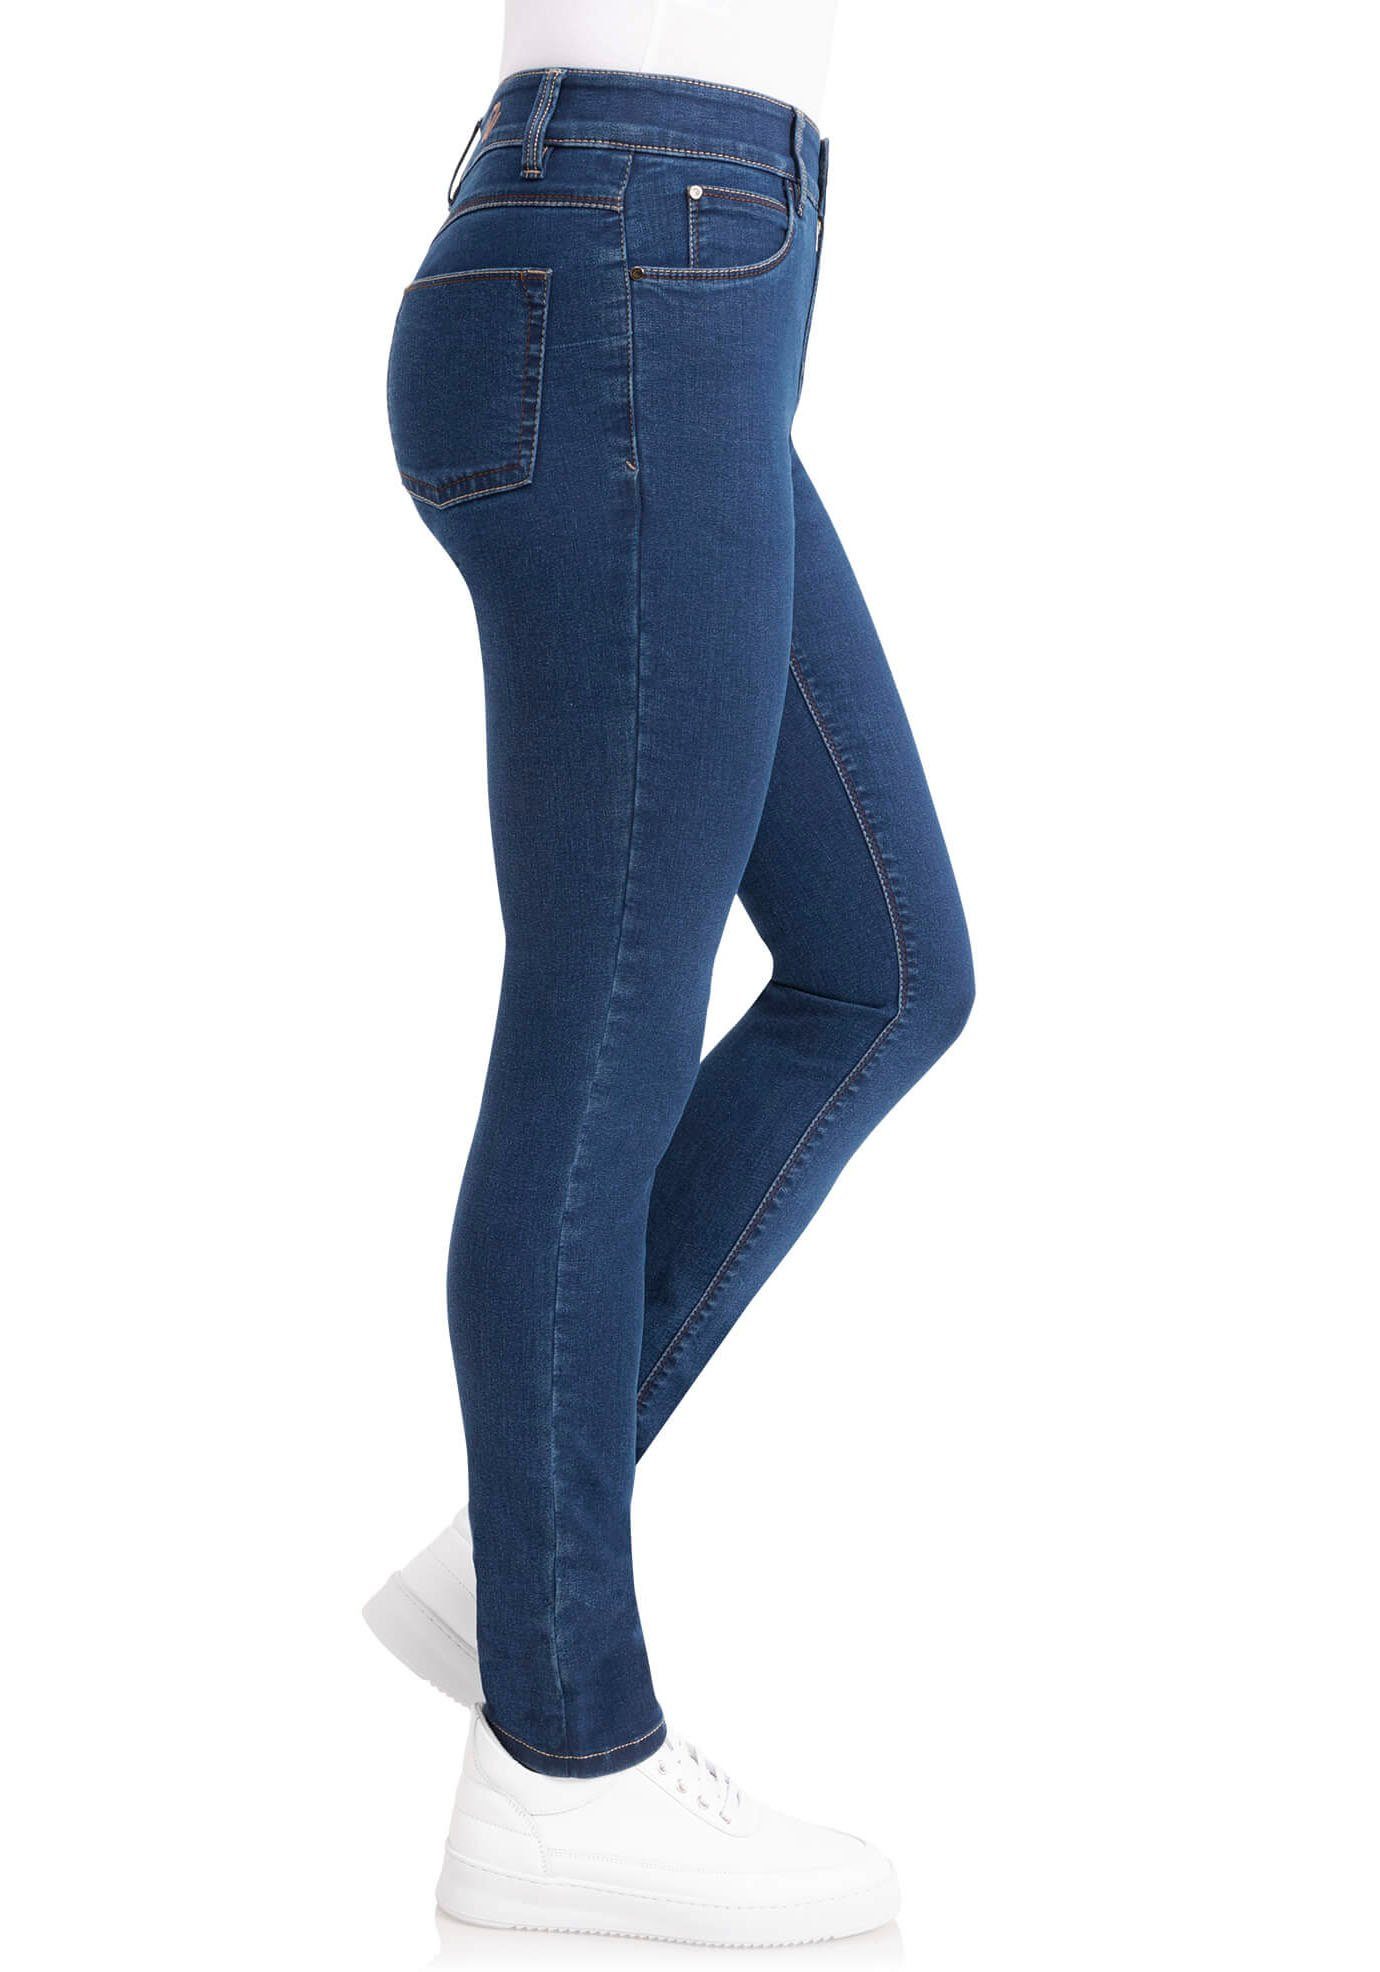 wonderjeans Slim-fit-Jeans Classic-Slim Klassischer gerader blue stone Schnitt washed